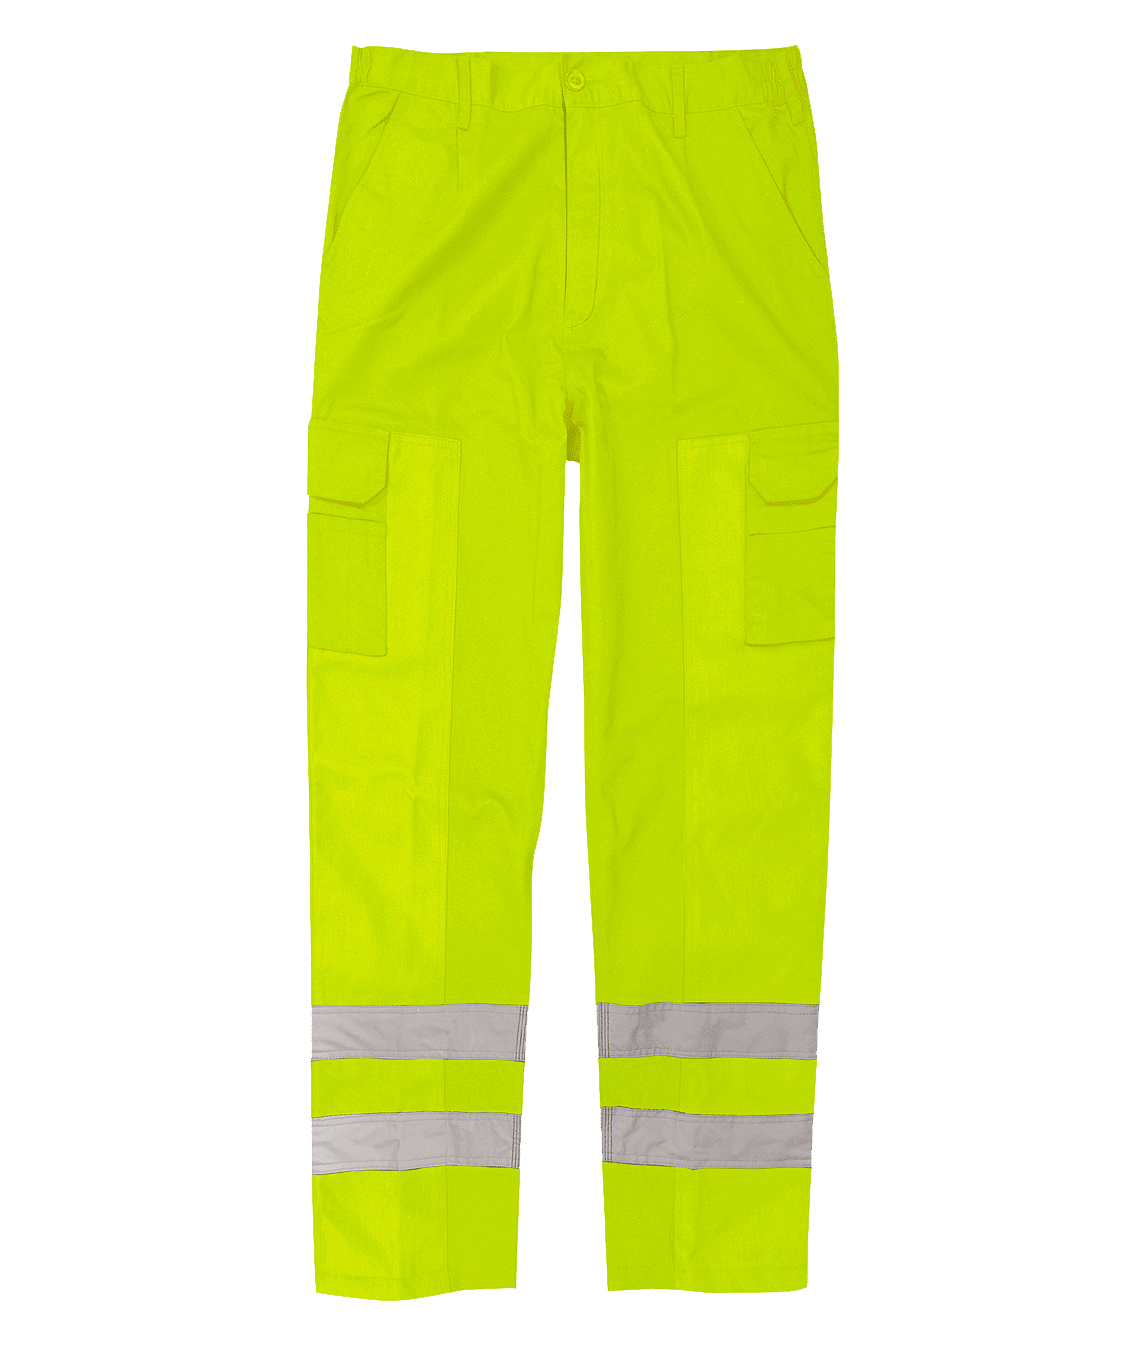 Vigilant Hi Visibility Ballistic Combat Trousers - Industrial Workwear